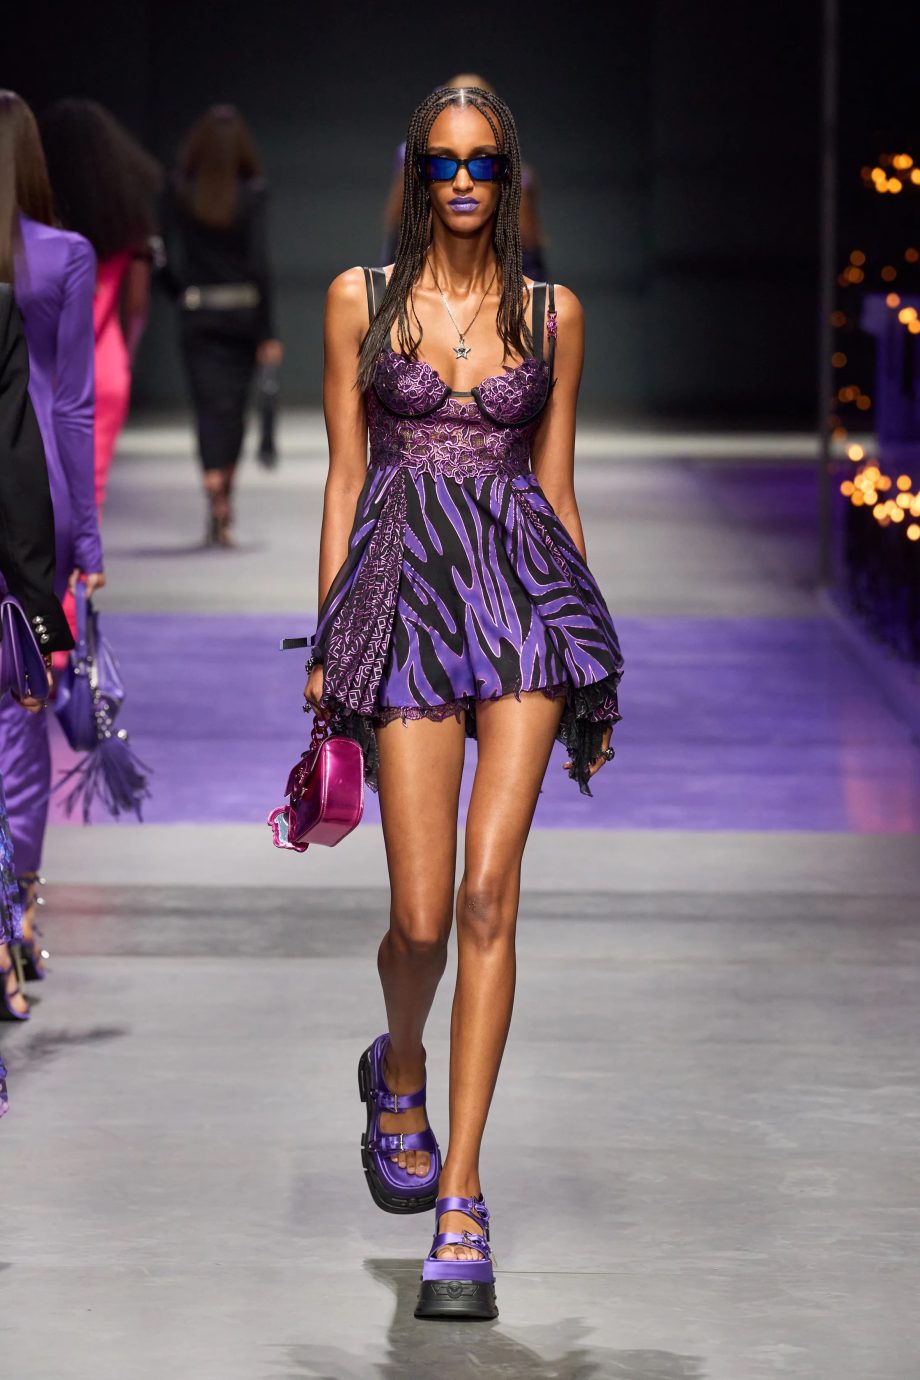 Milan Fashion Week lente/zomer 2023 in 5 highlights Vogue.nl